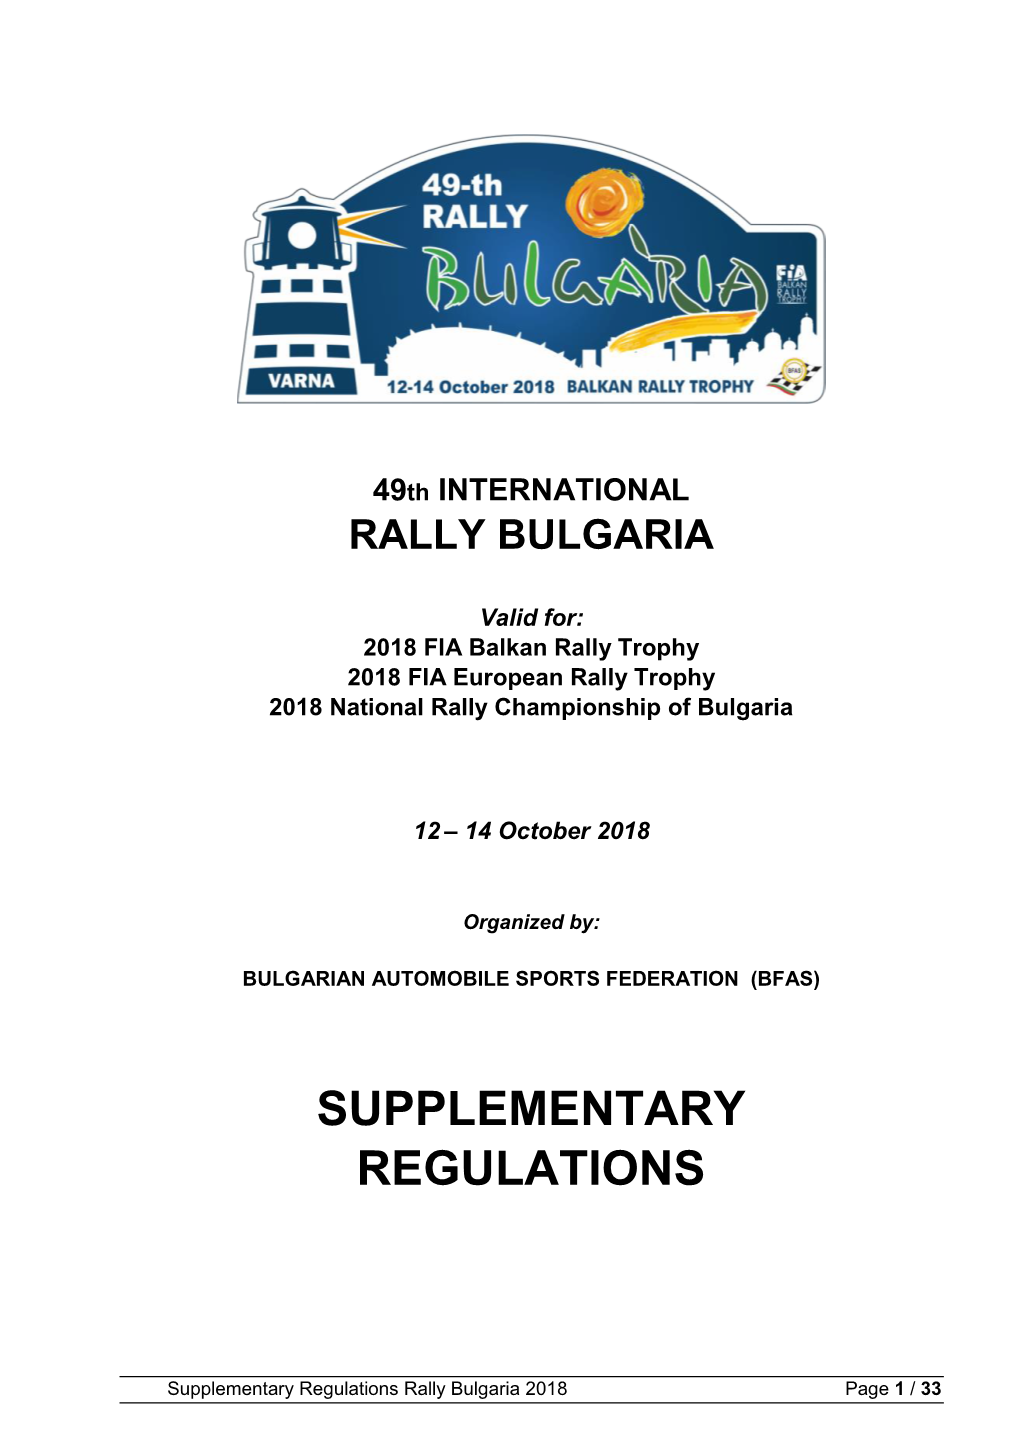 Rally Bulgaria 2018 – Supplementary Regulations